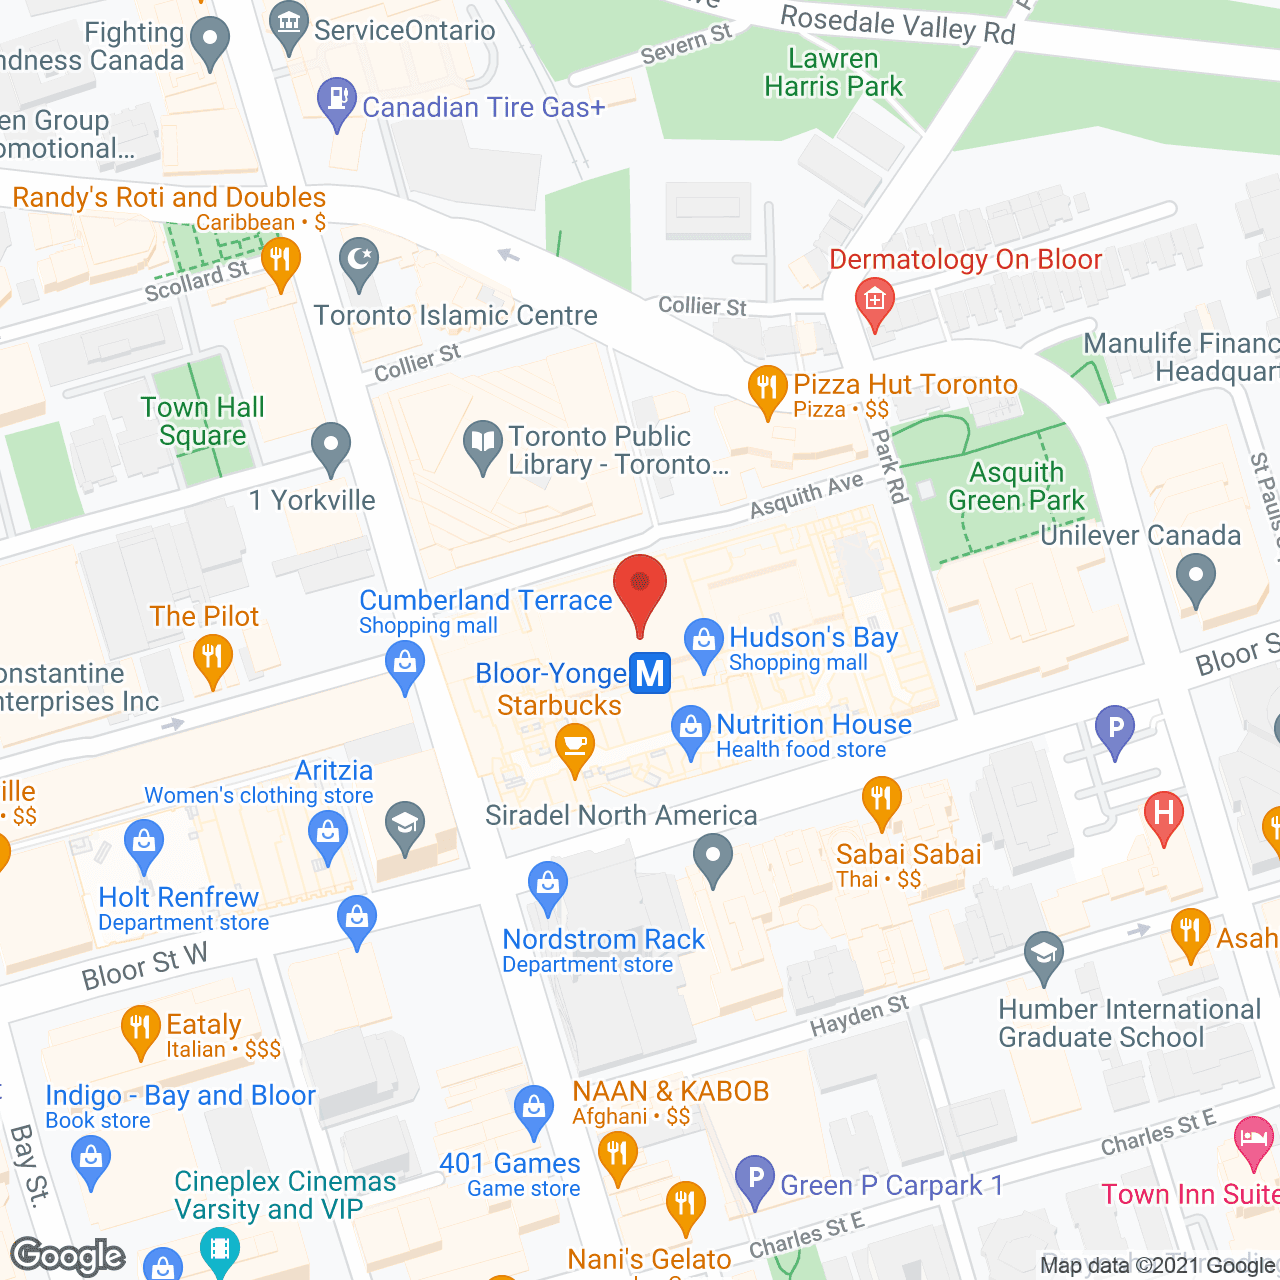 Spectrum Health Care - Toronto in google map